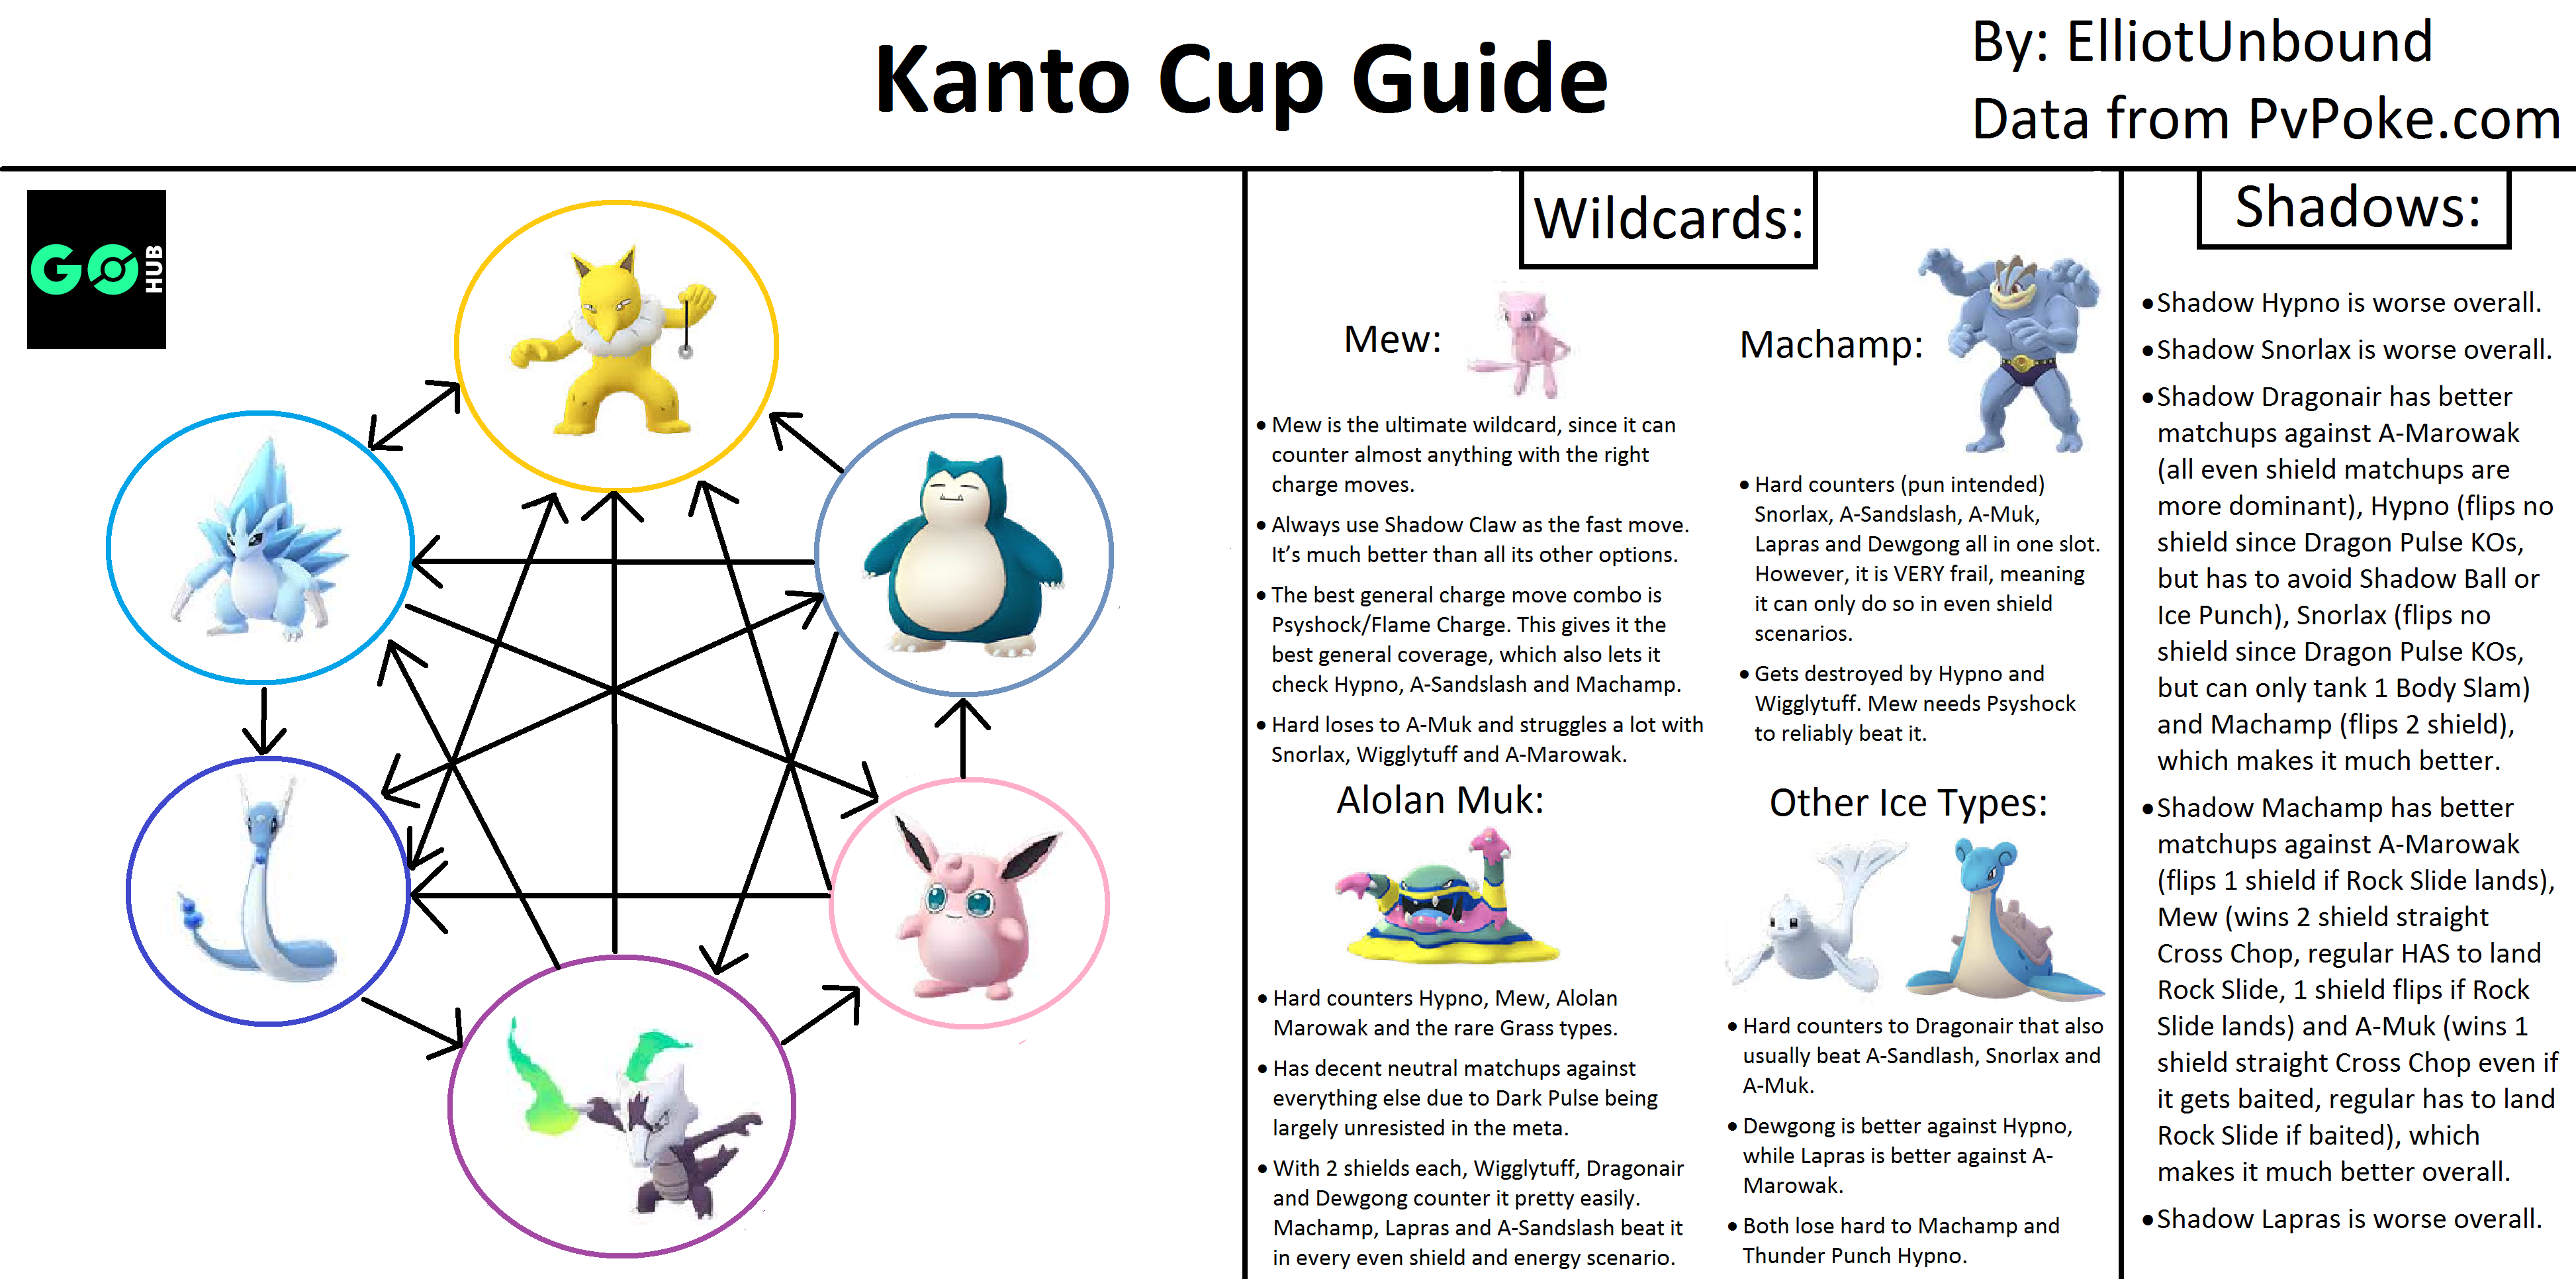 Pokemon GO: Best tips and tricks to complete Kanto Pokedex